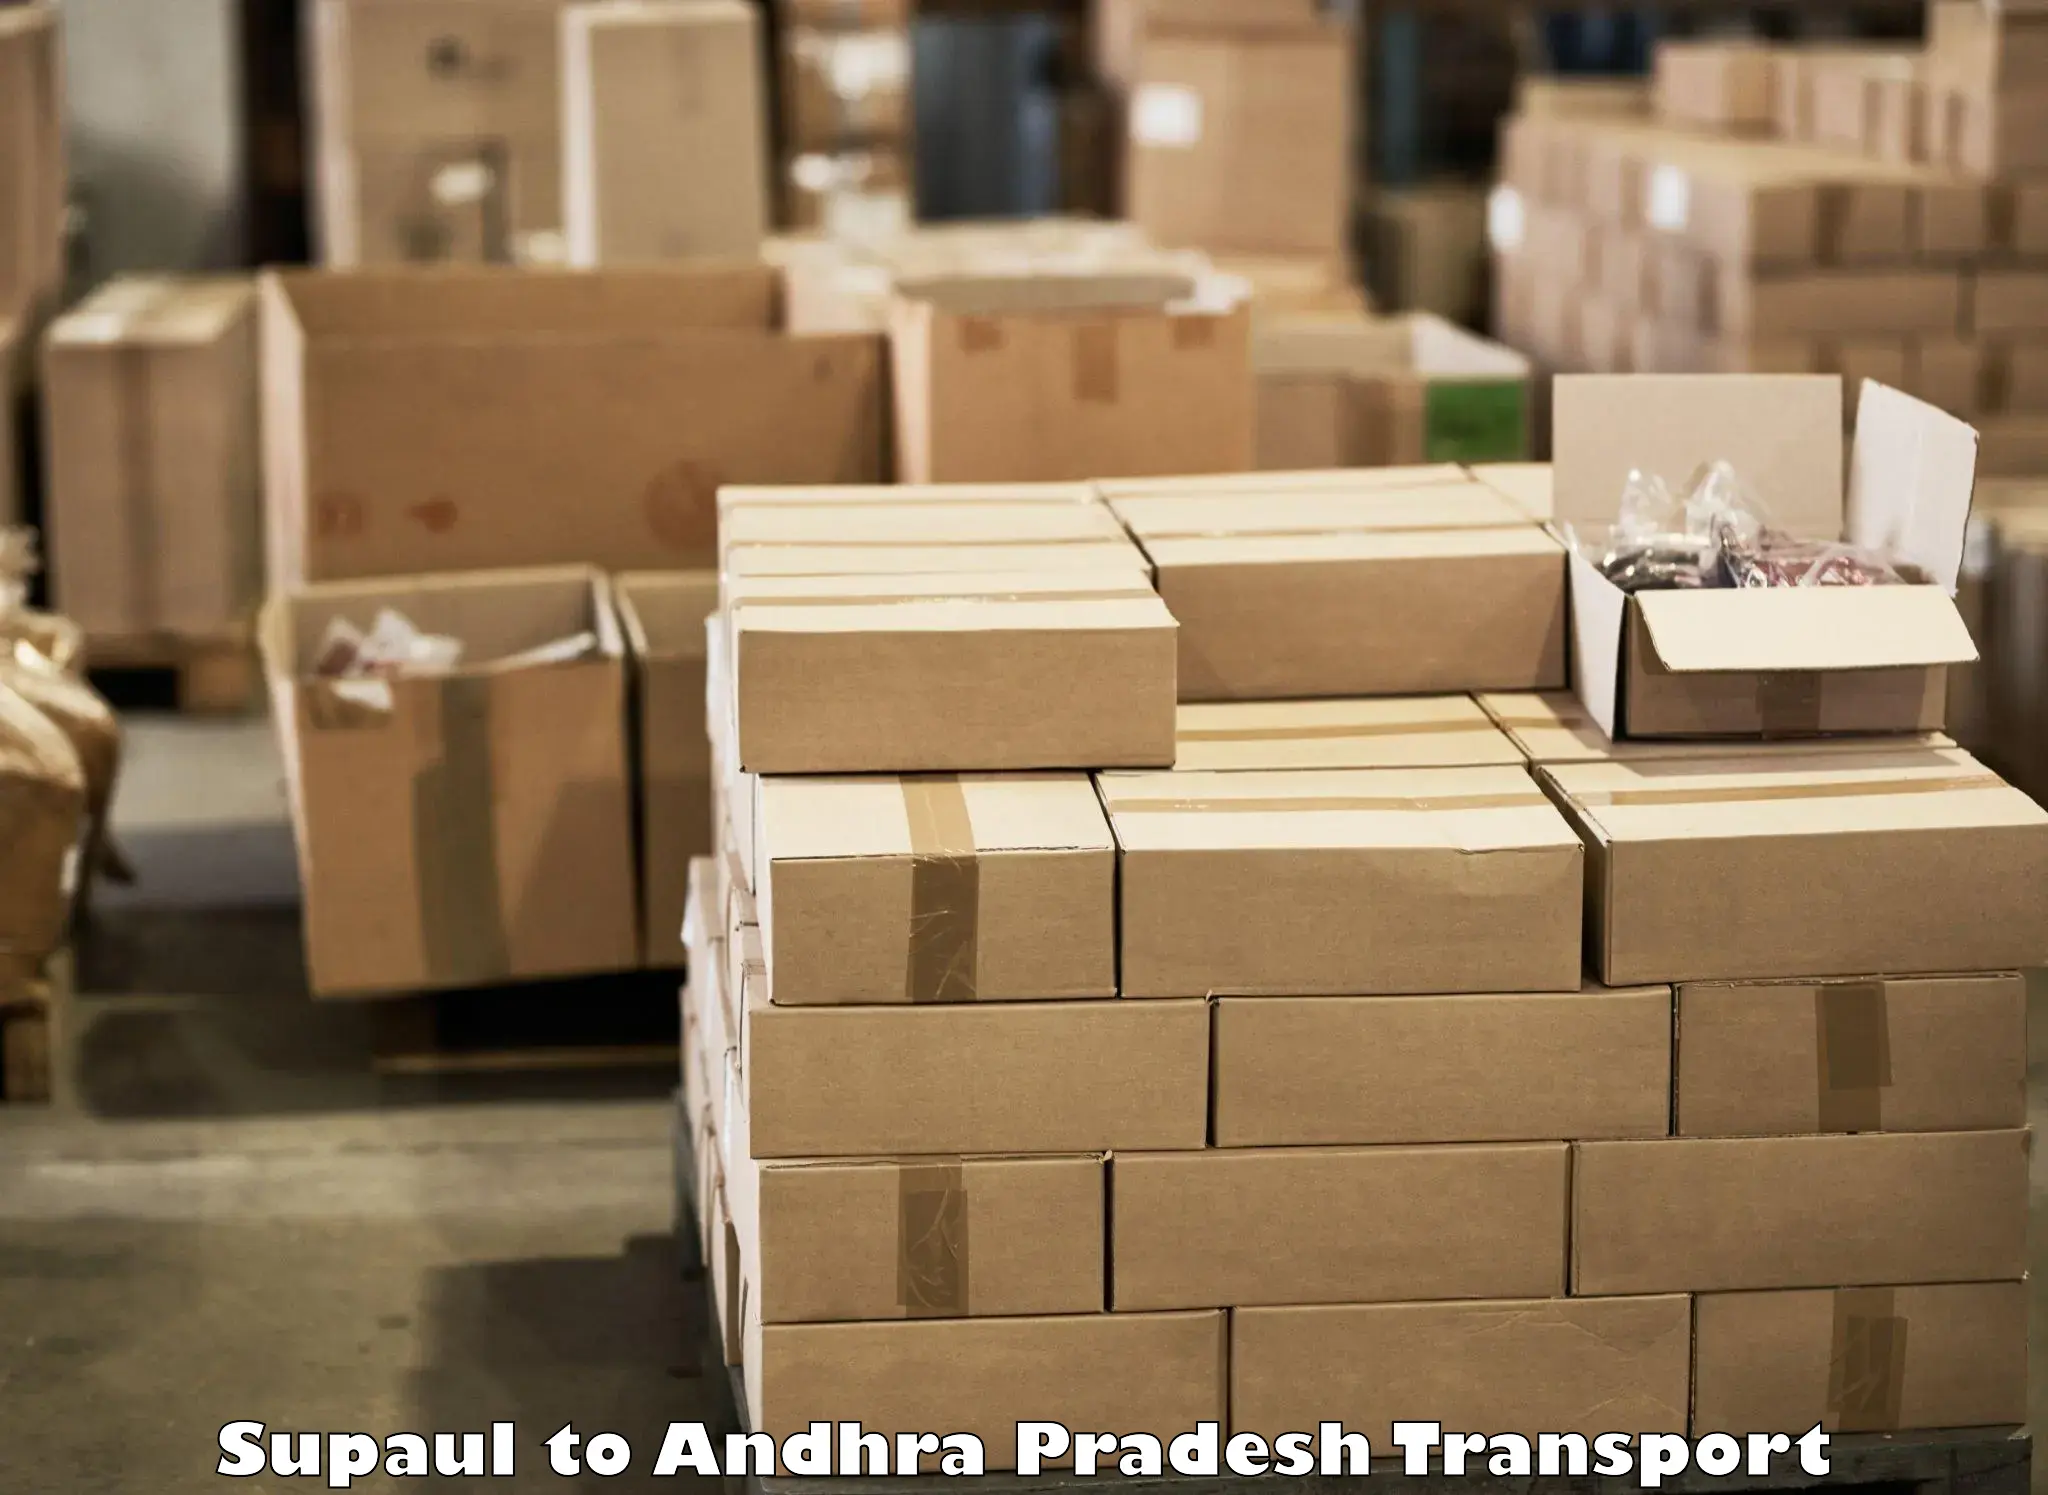 Truck transport companies in India Supaul to Andhra Pradesh